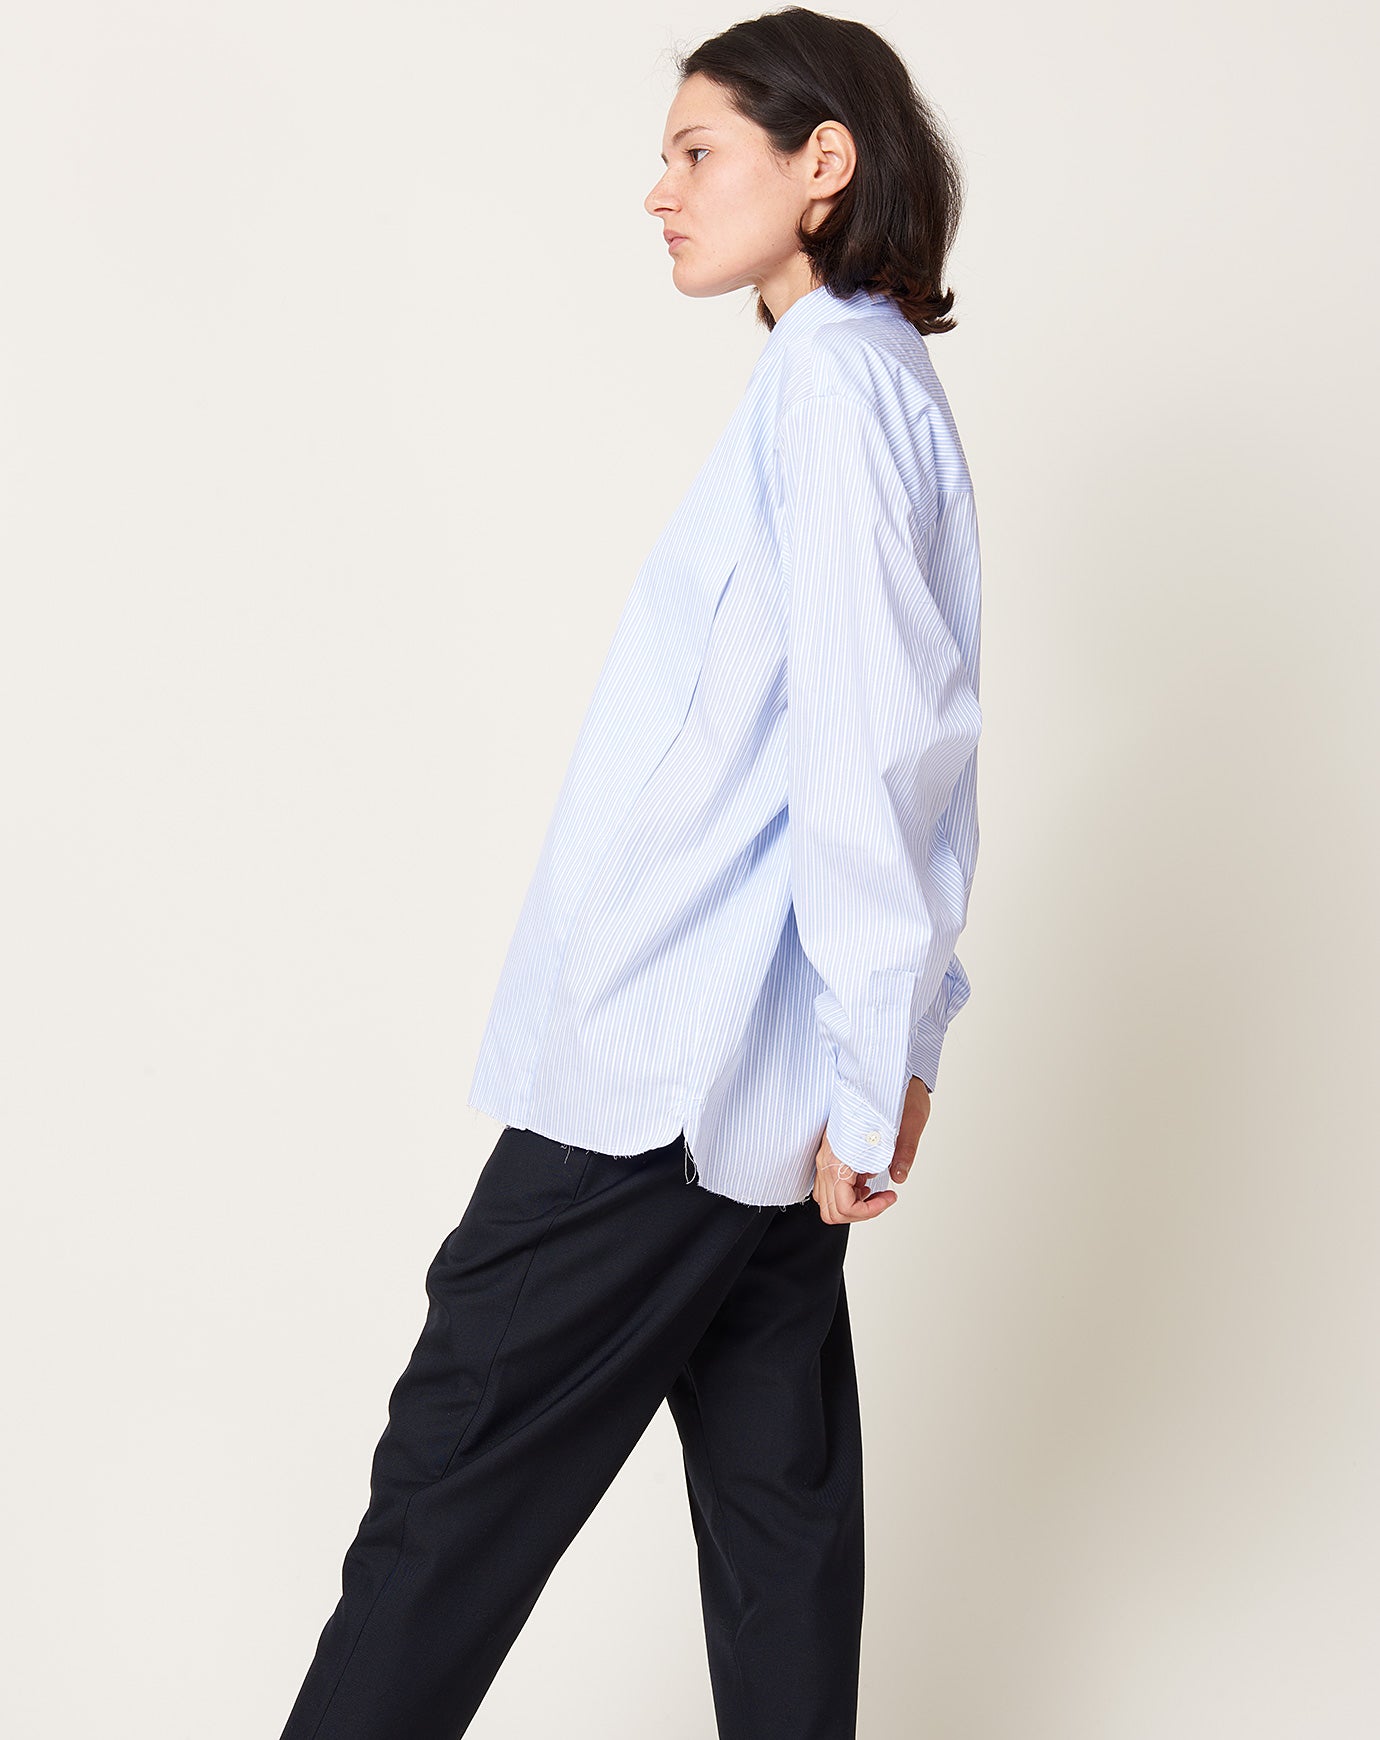 Pocket Shirt in Blue and White Stripe | Camiel Fortgens | Covet +